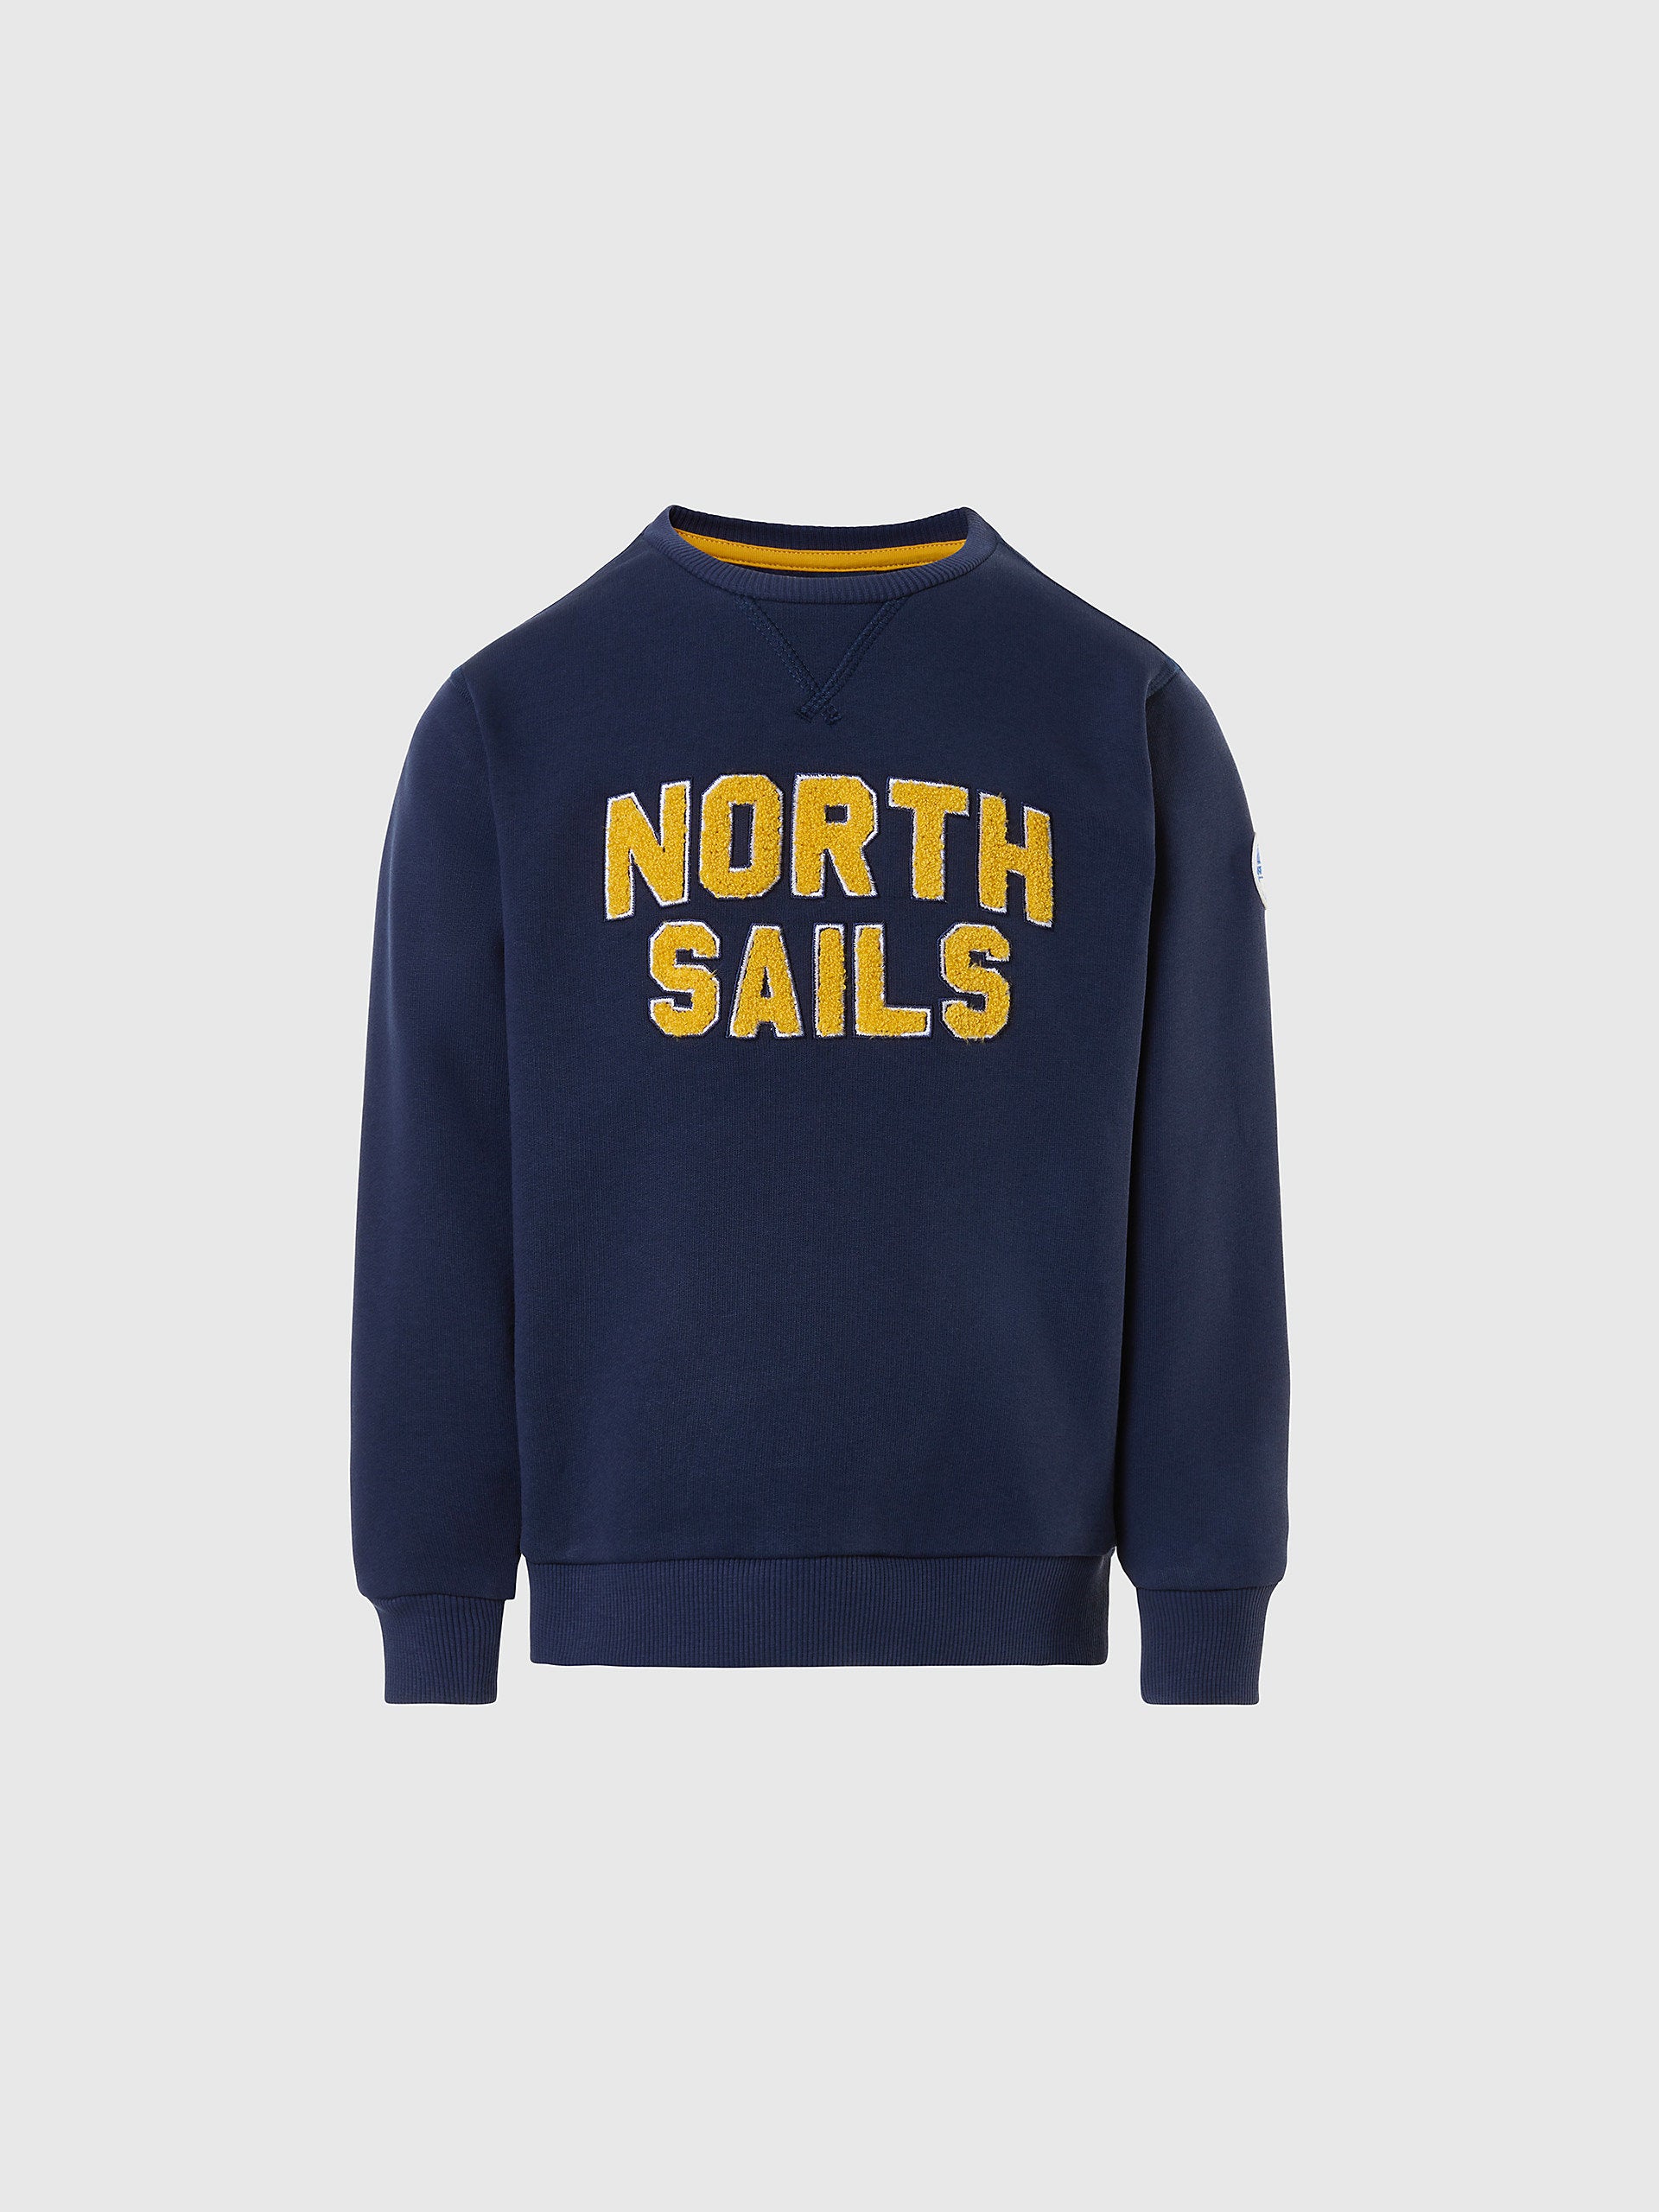 North Sails - Felpa con letteringNorth SailsNavy blue10